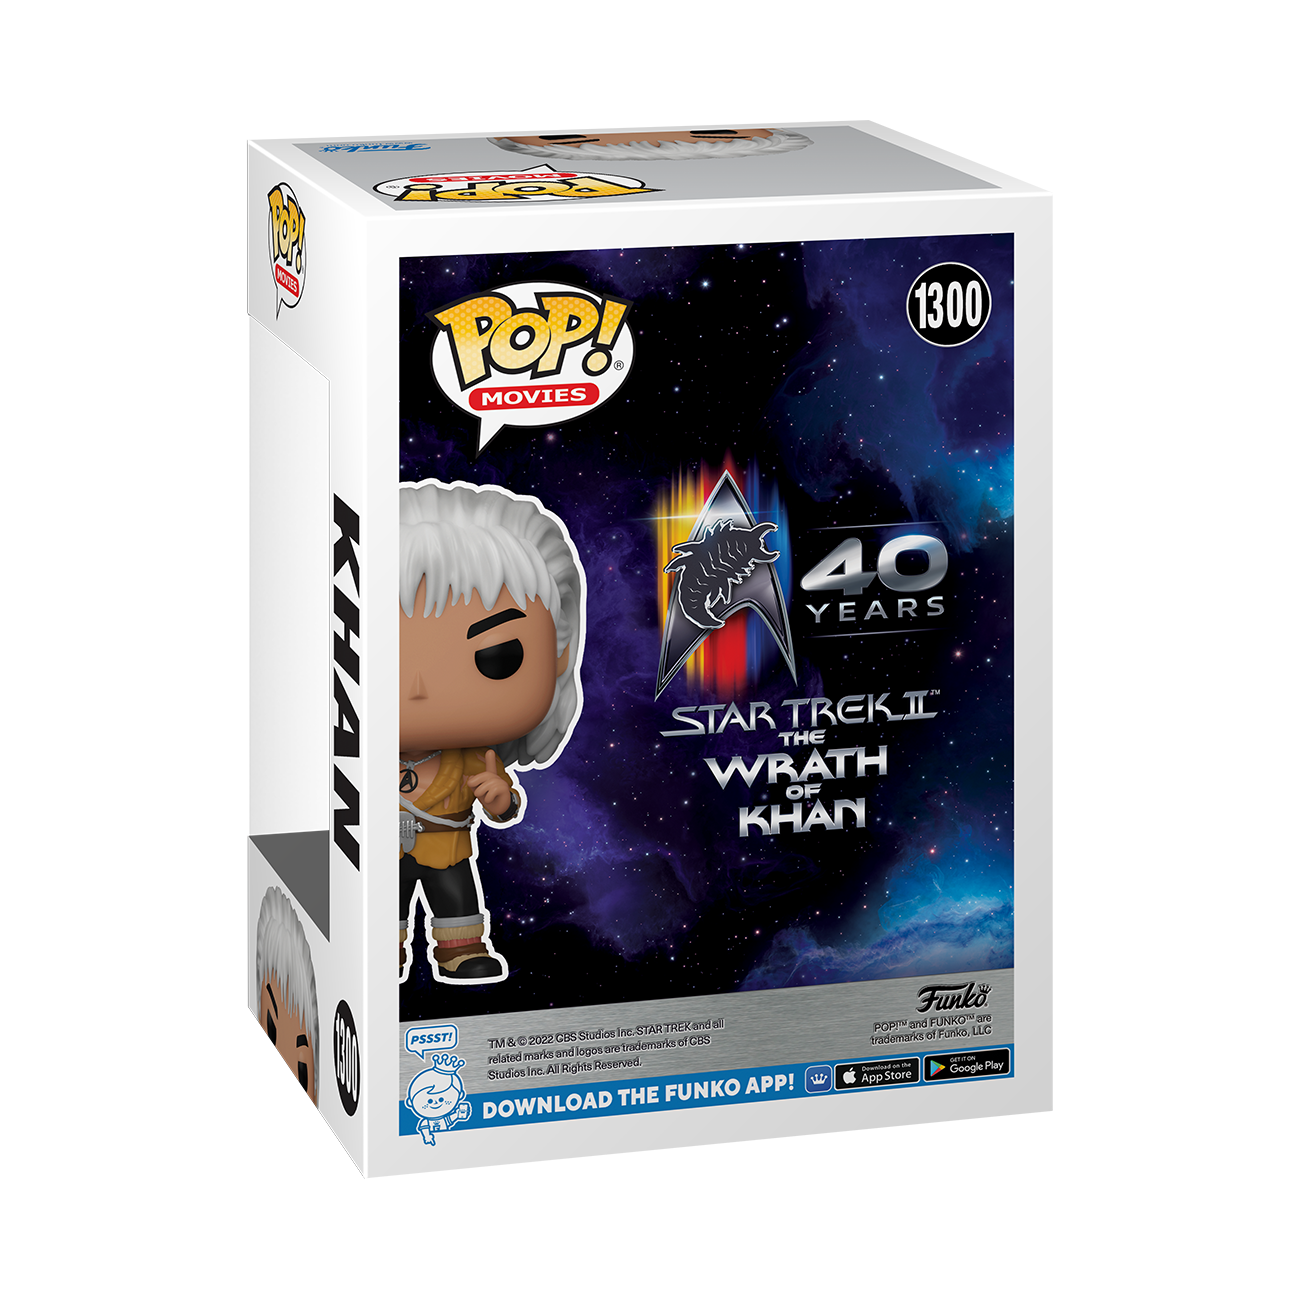 Star Trek II: The Wrath of Khan Funko POP! Exclusive - 40th Anniversary Limited Edition Figure